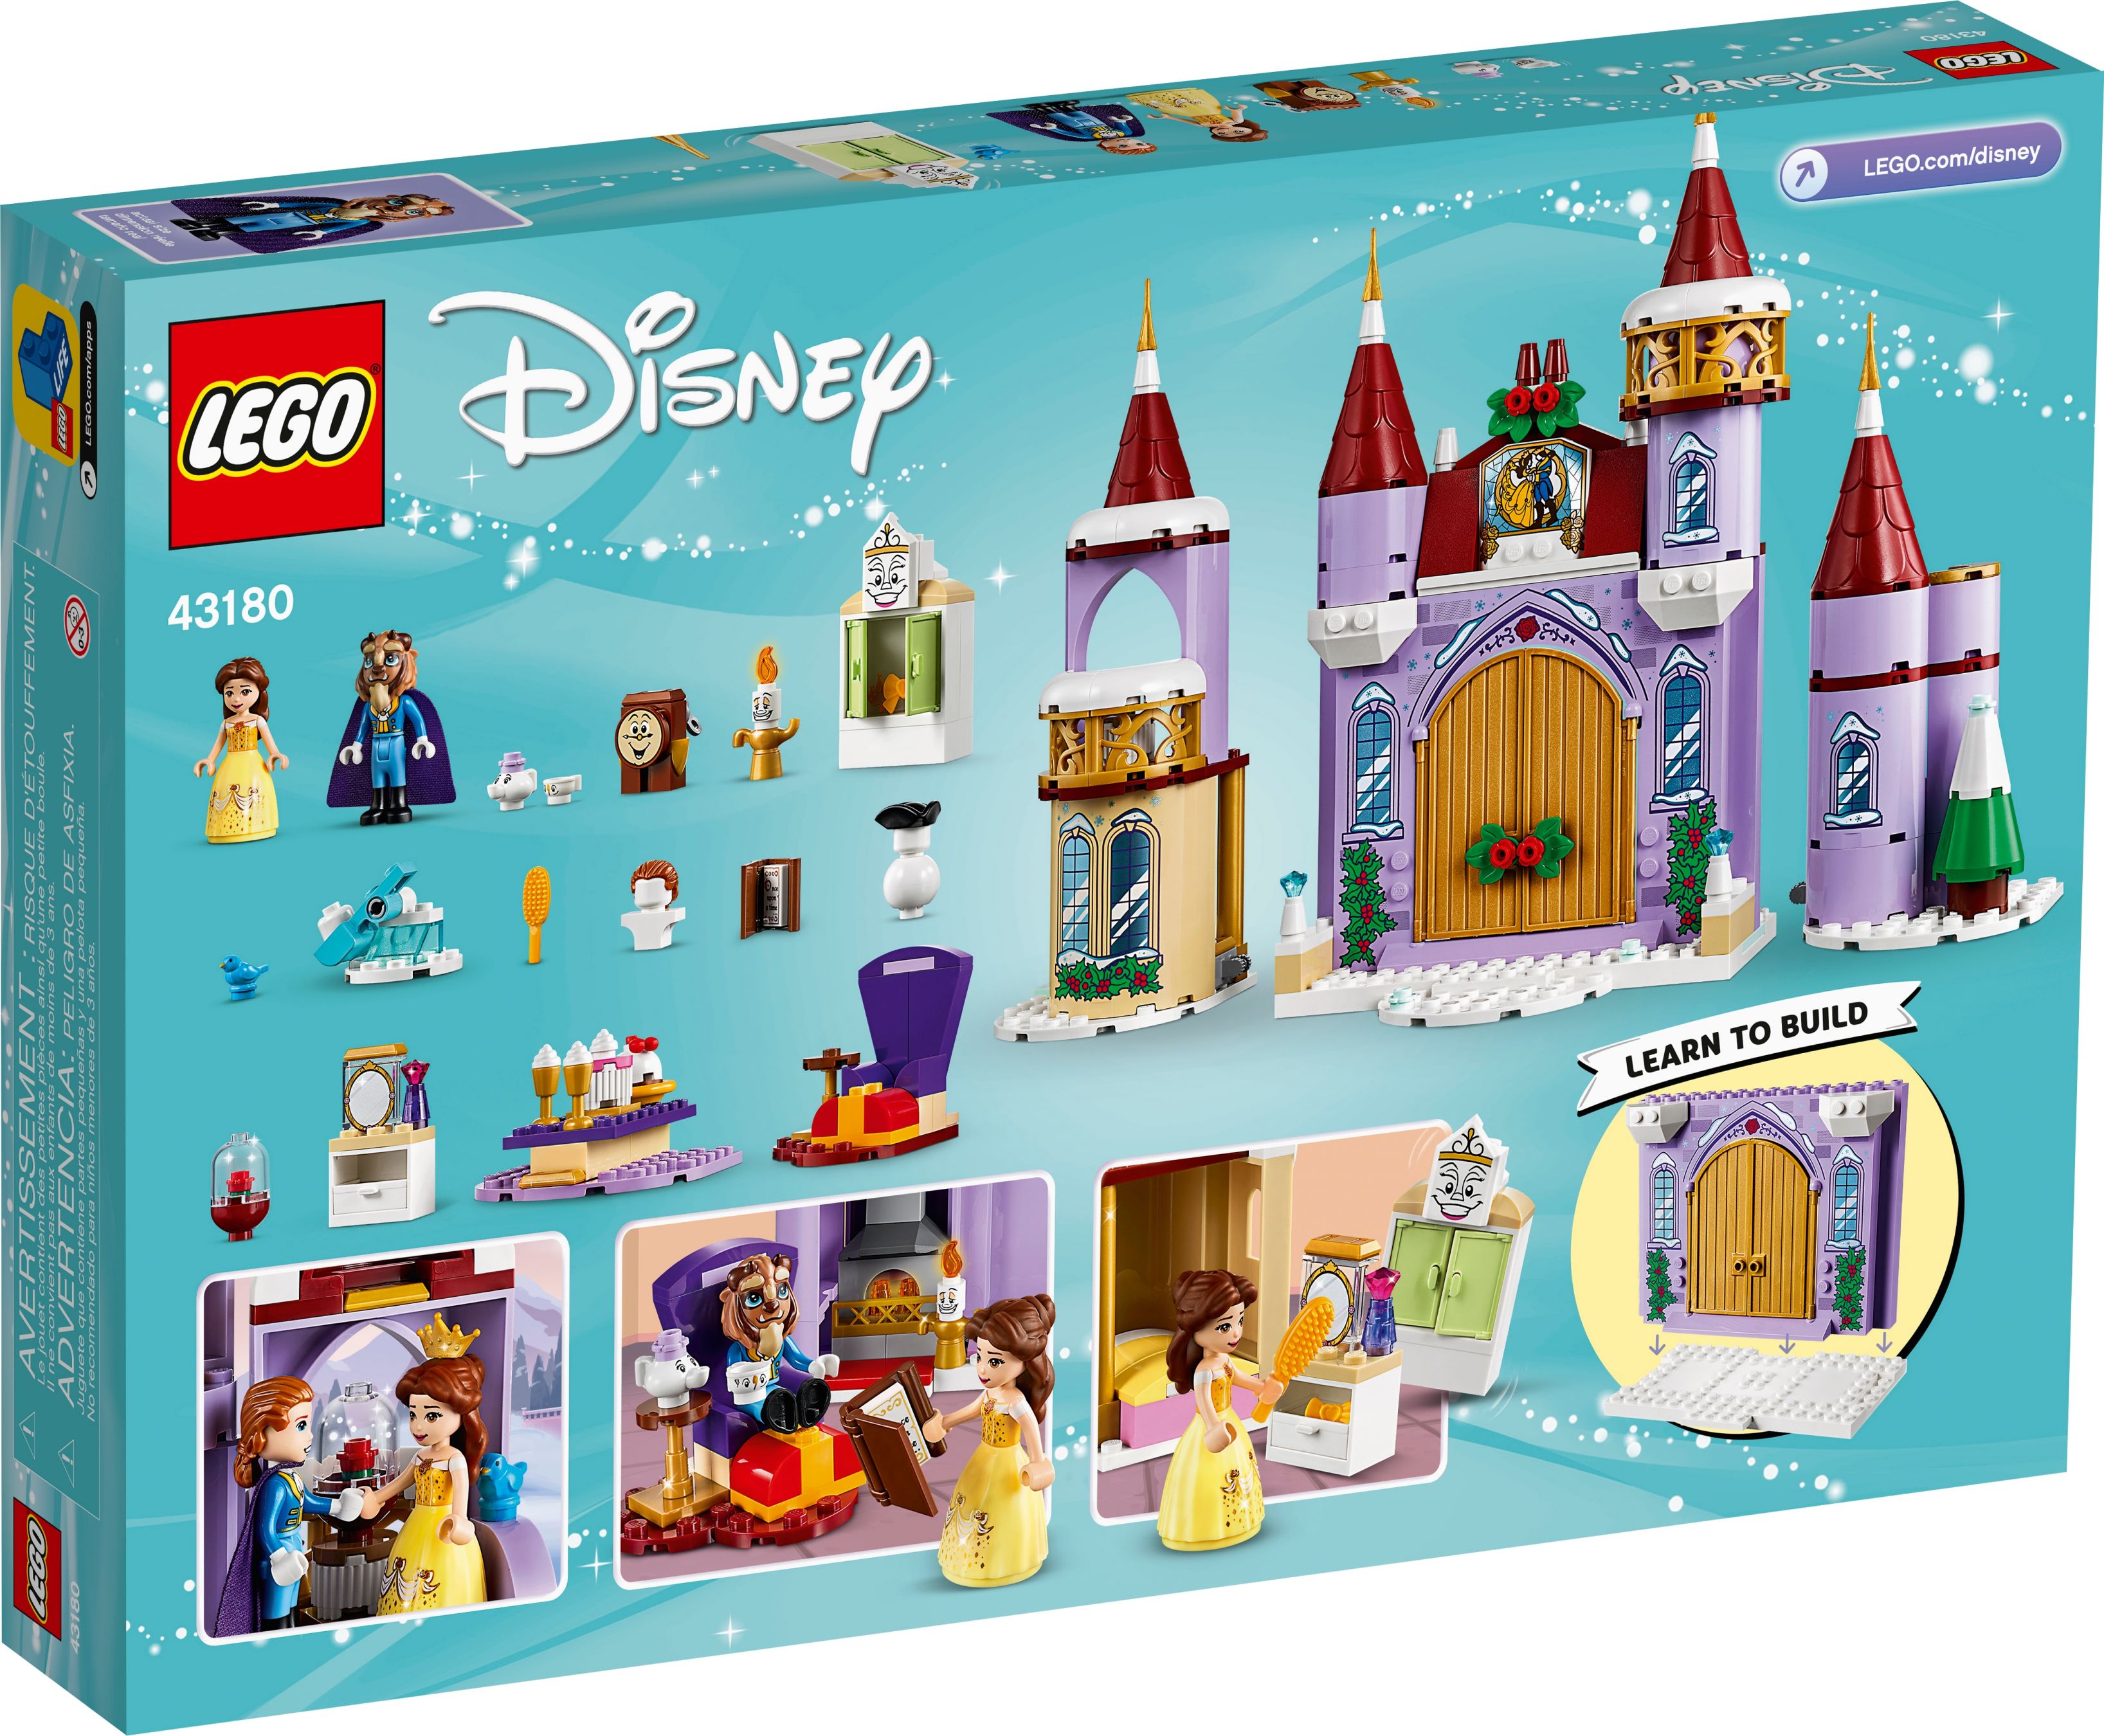 LEGO Disney 43180 Belles winterliches Schloss LEGO_43180_alt5.jpg